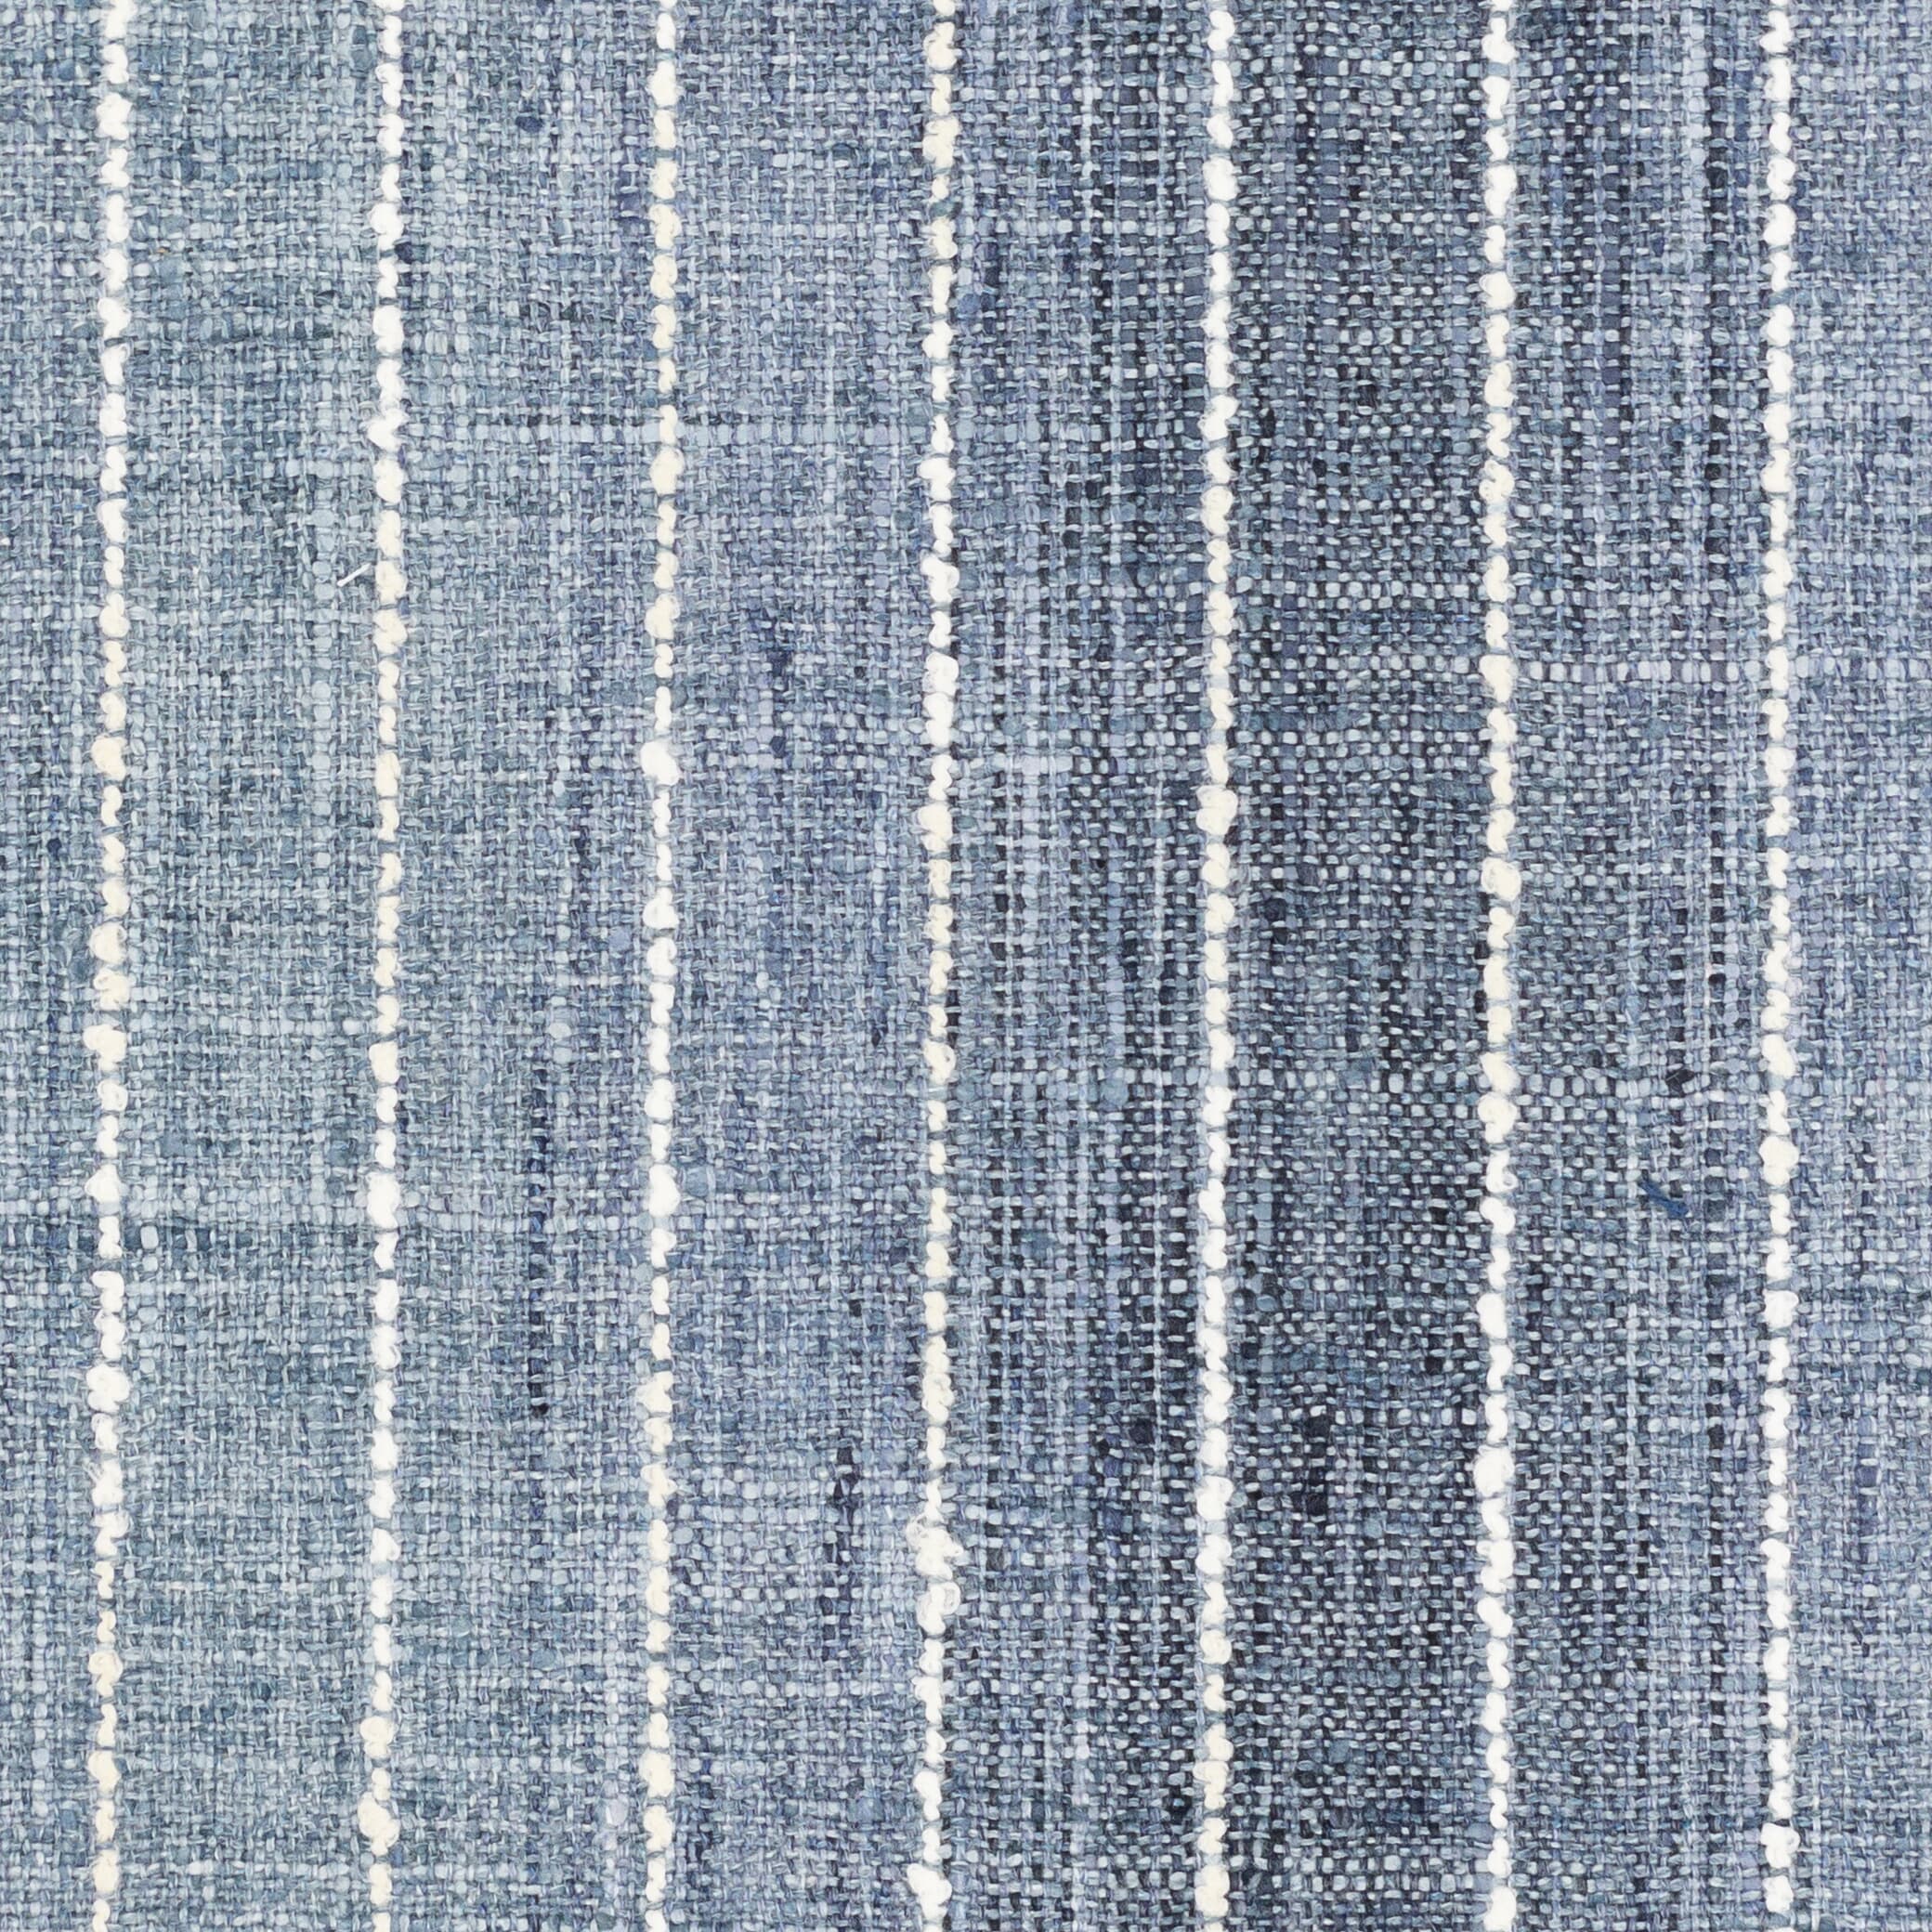 Iris 1 Denim by Stout Fabric